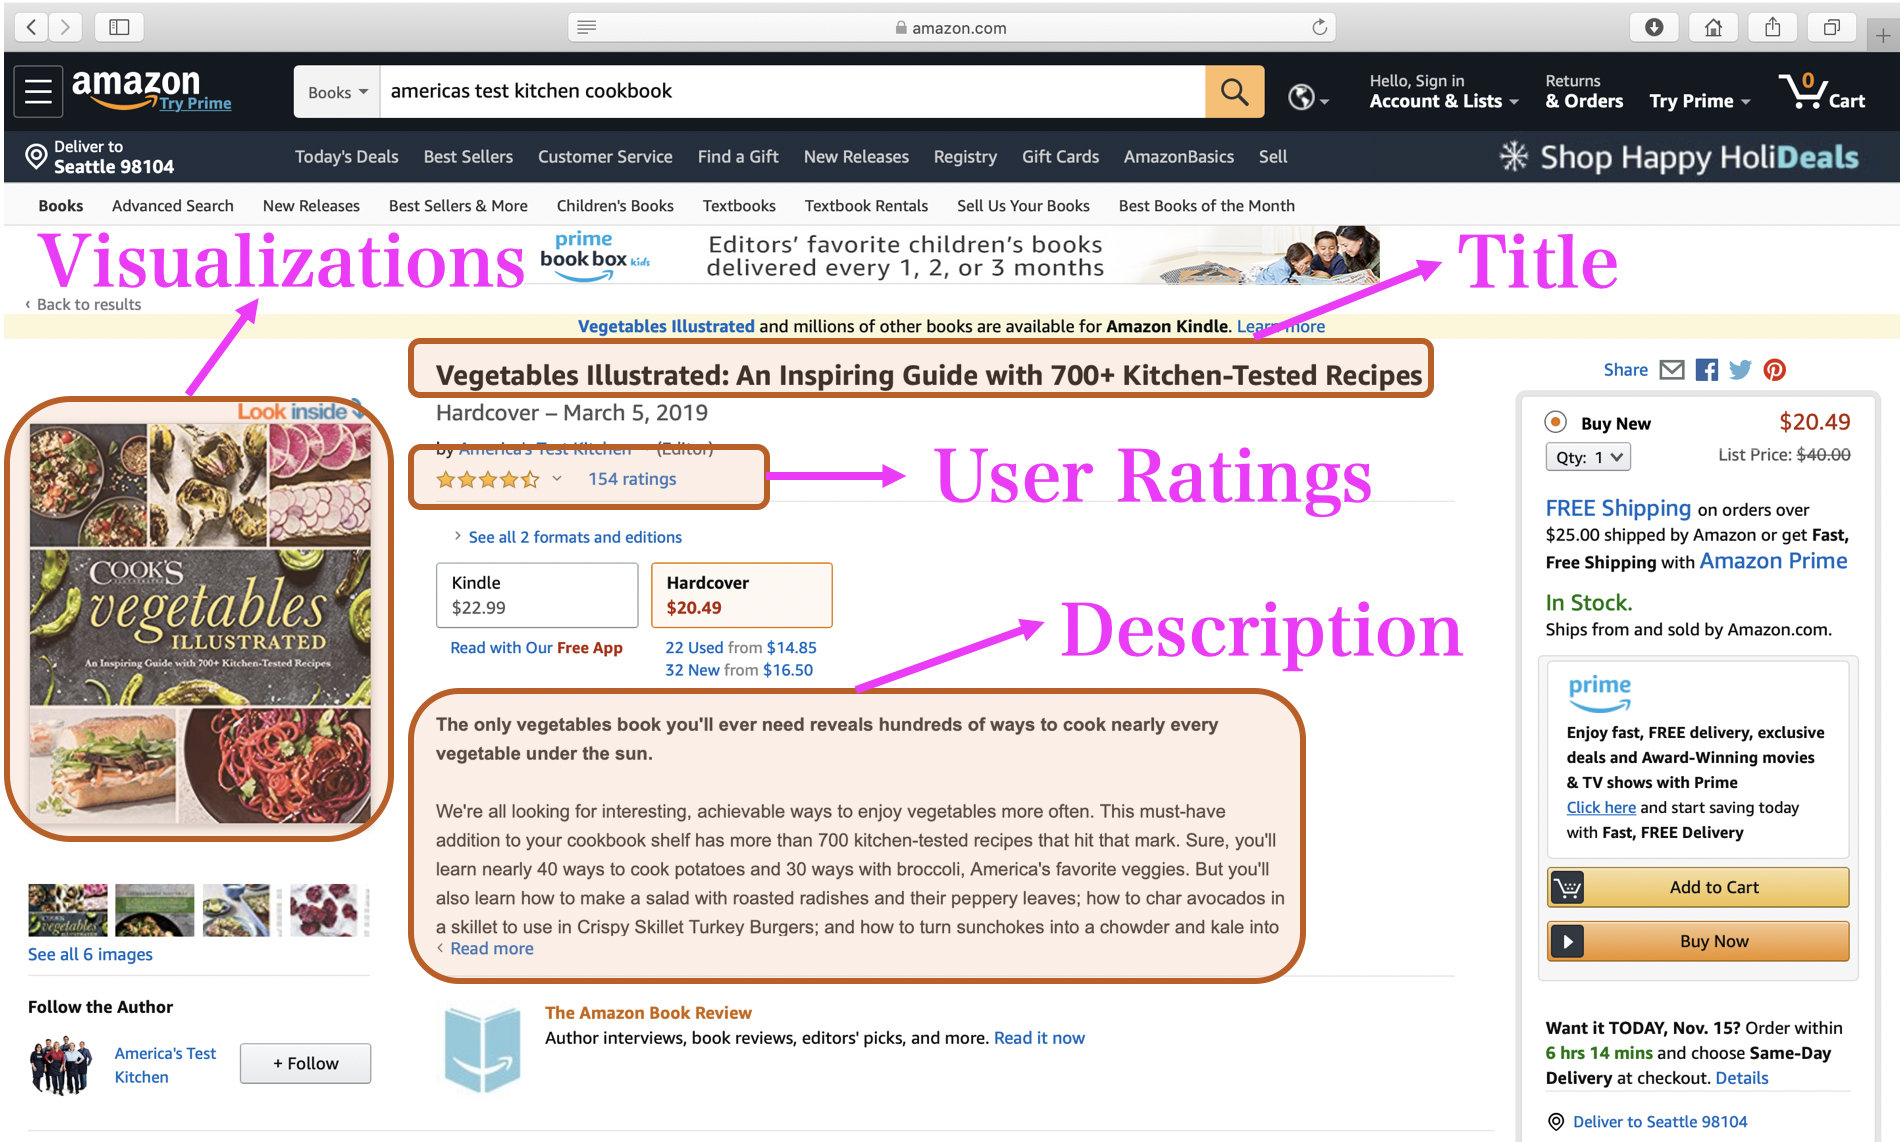 Cookbook Data Format on Amazon.com